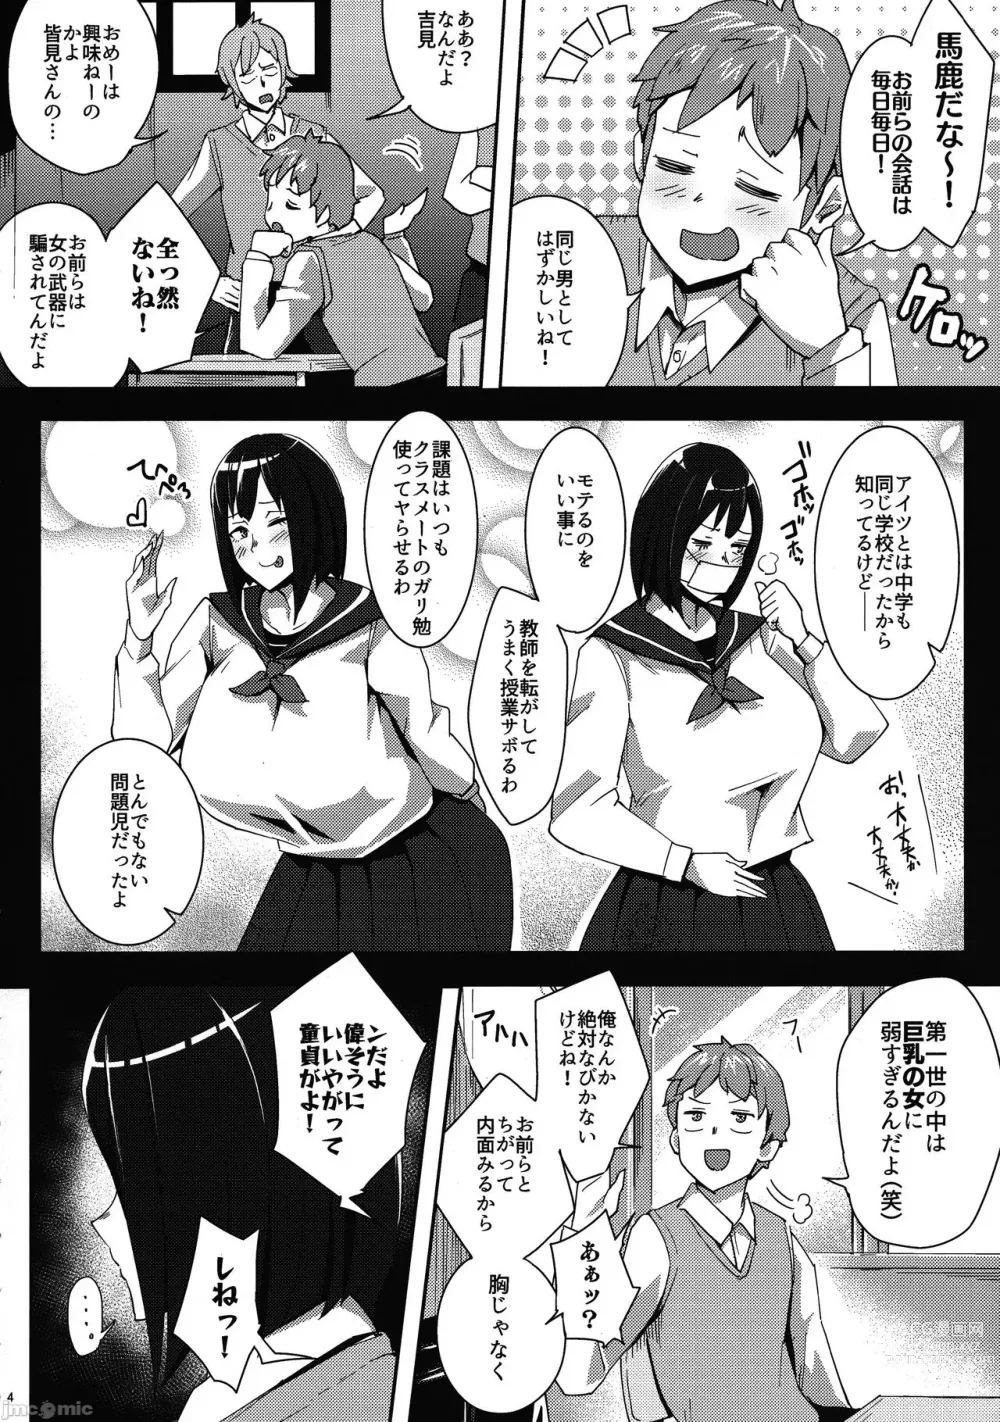 Page 3 of manga Minami-san Sensational